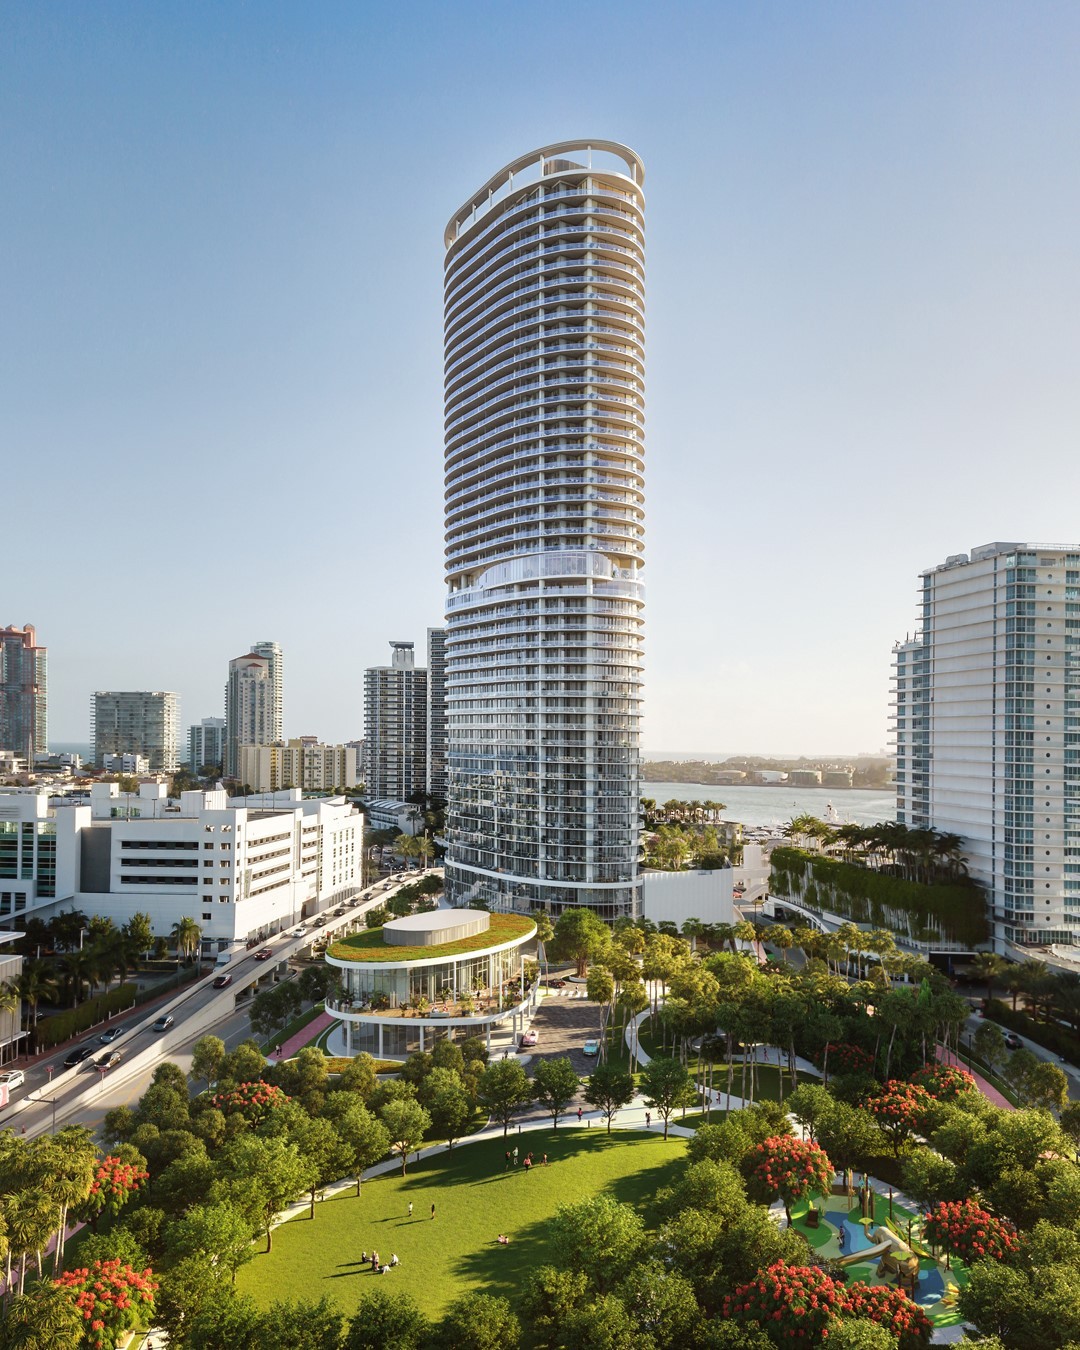 Large High-Rise Condominium Five Park in Miami Beach. Photo by Instagram user @fiveparkmiamibeach